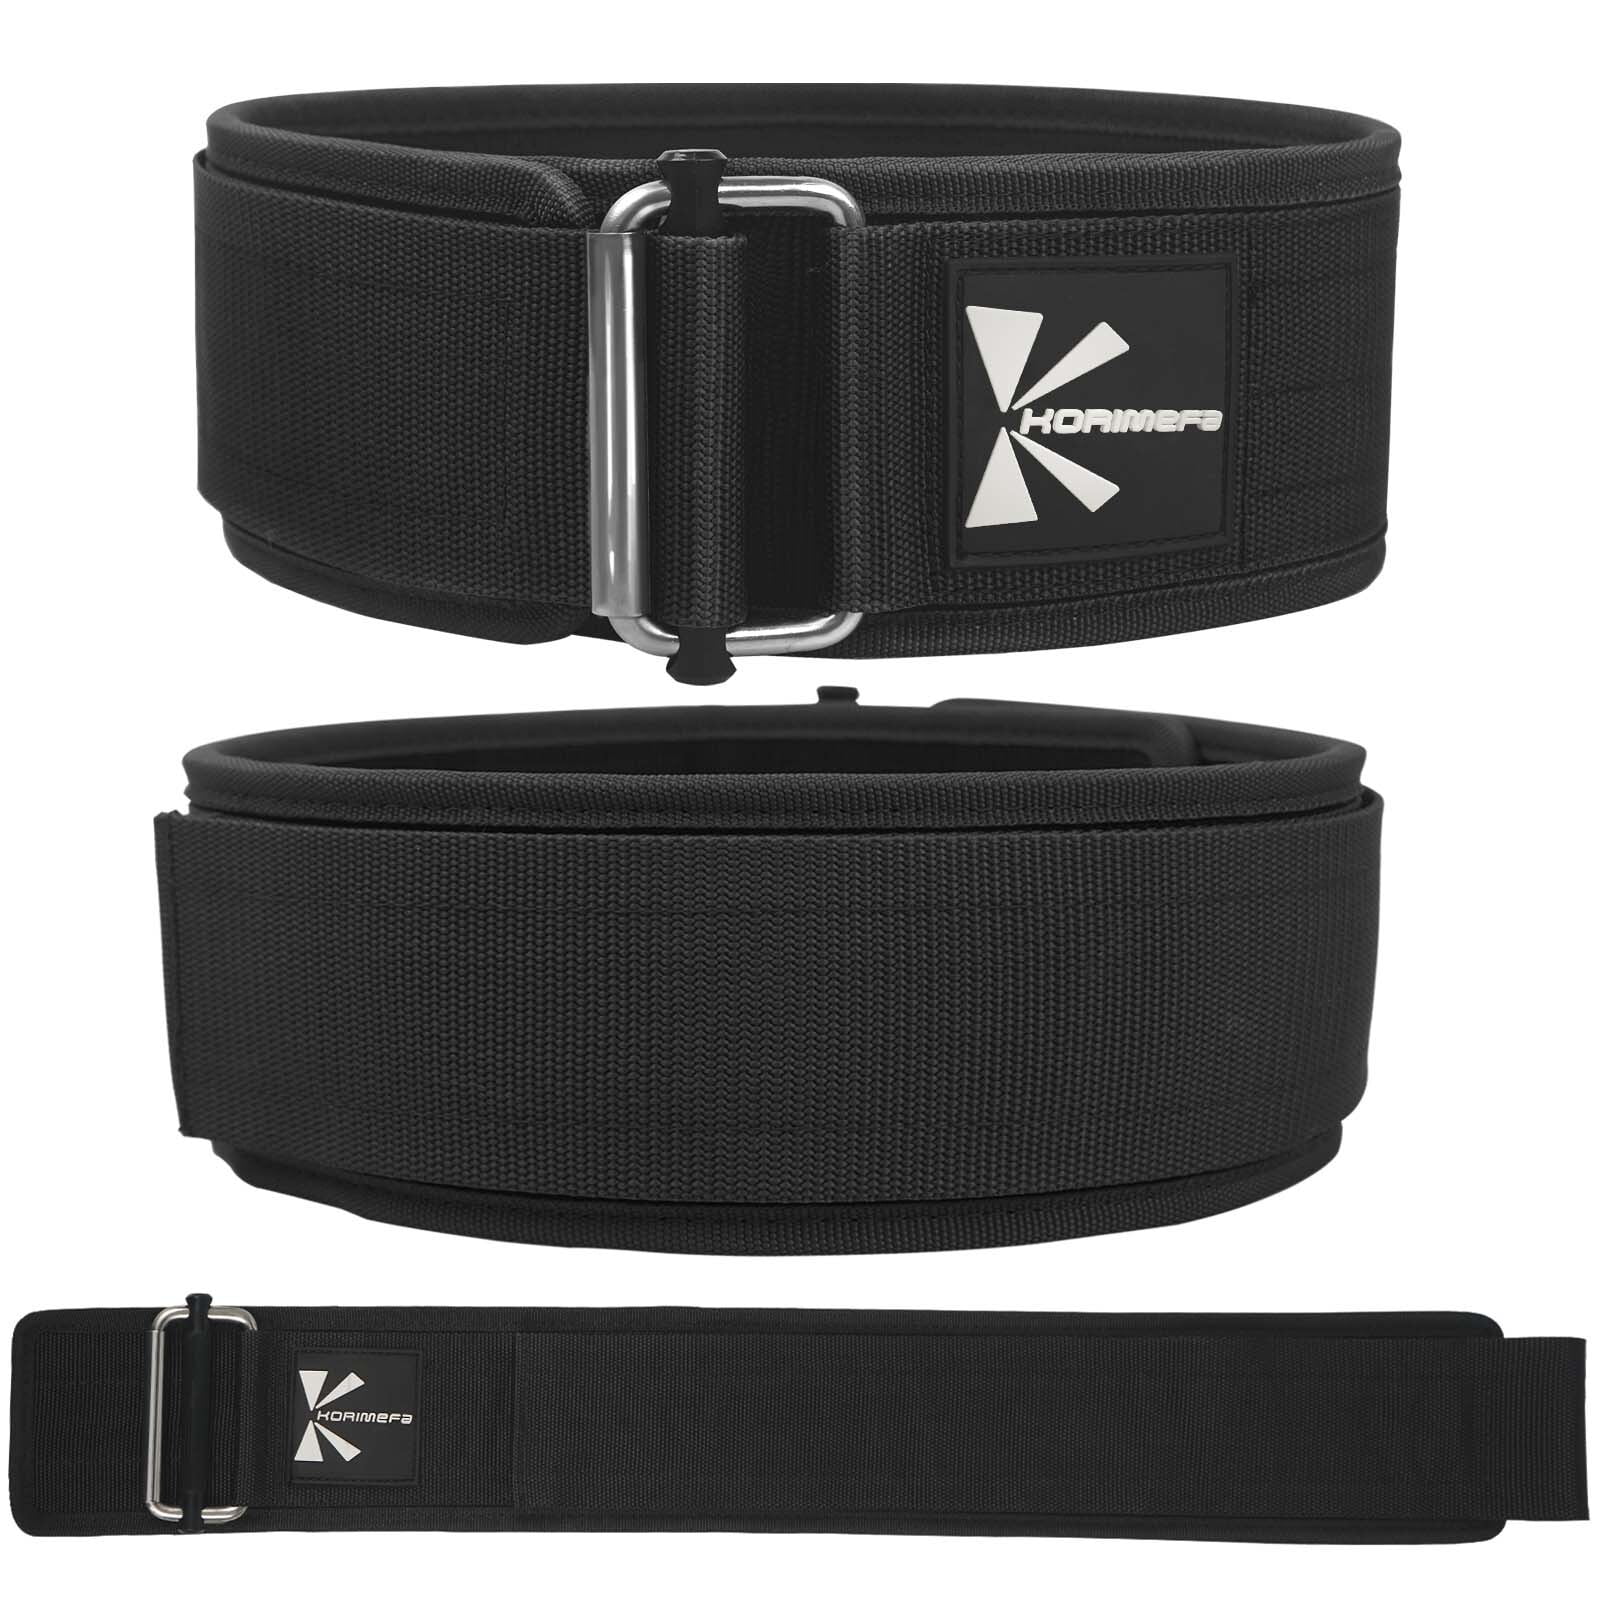 KORIMEFA Quick Locking Weight Lifting Belt, Premium Weightlifting Belt for  Professional Fitness, Weight Lifting, Olympic Lifting Athletes, Lifting